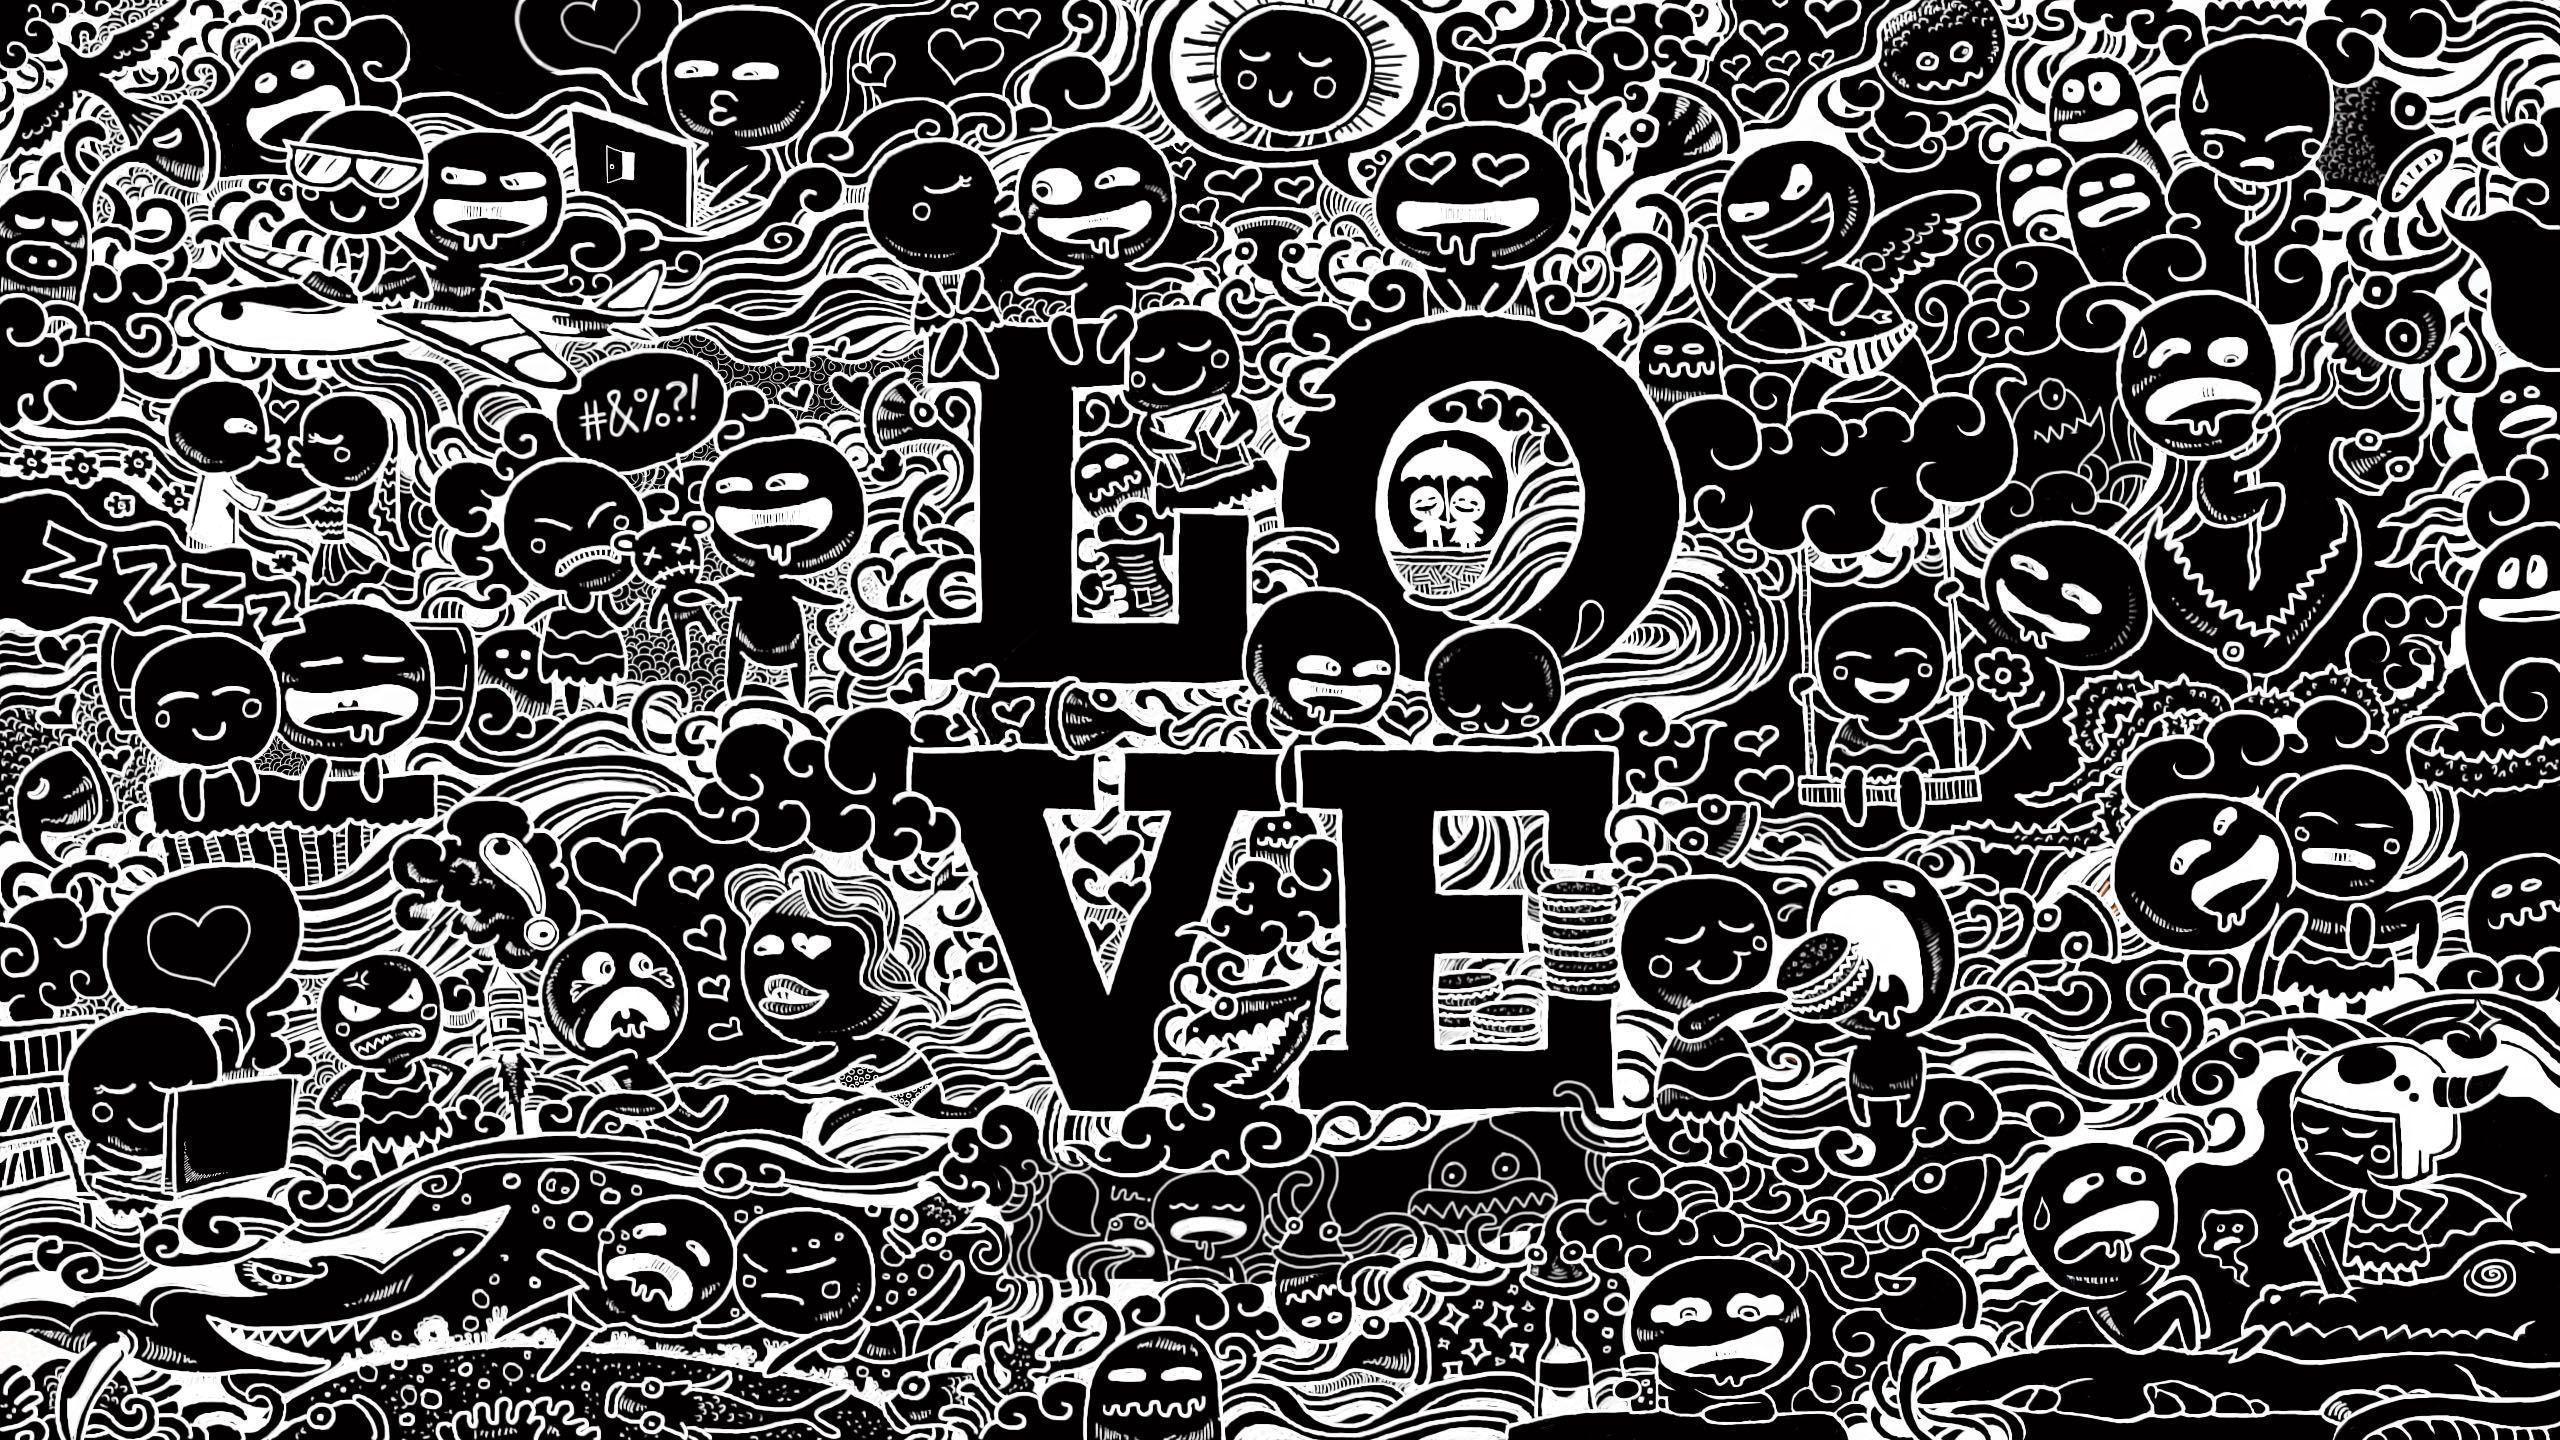 Wallpaper Freebie for February 2013: LOVE Doodles